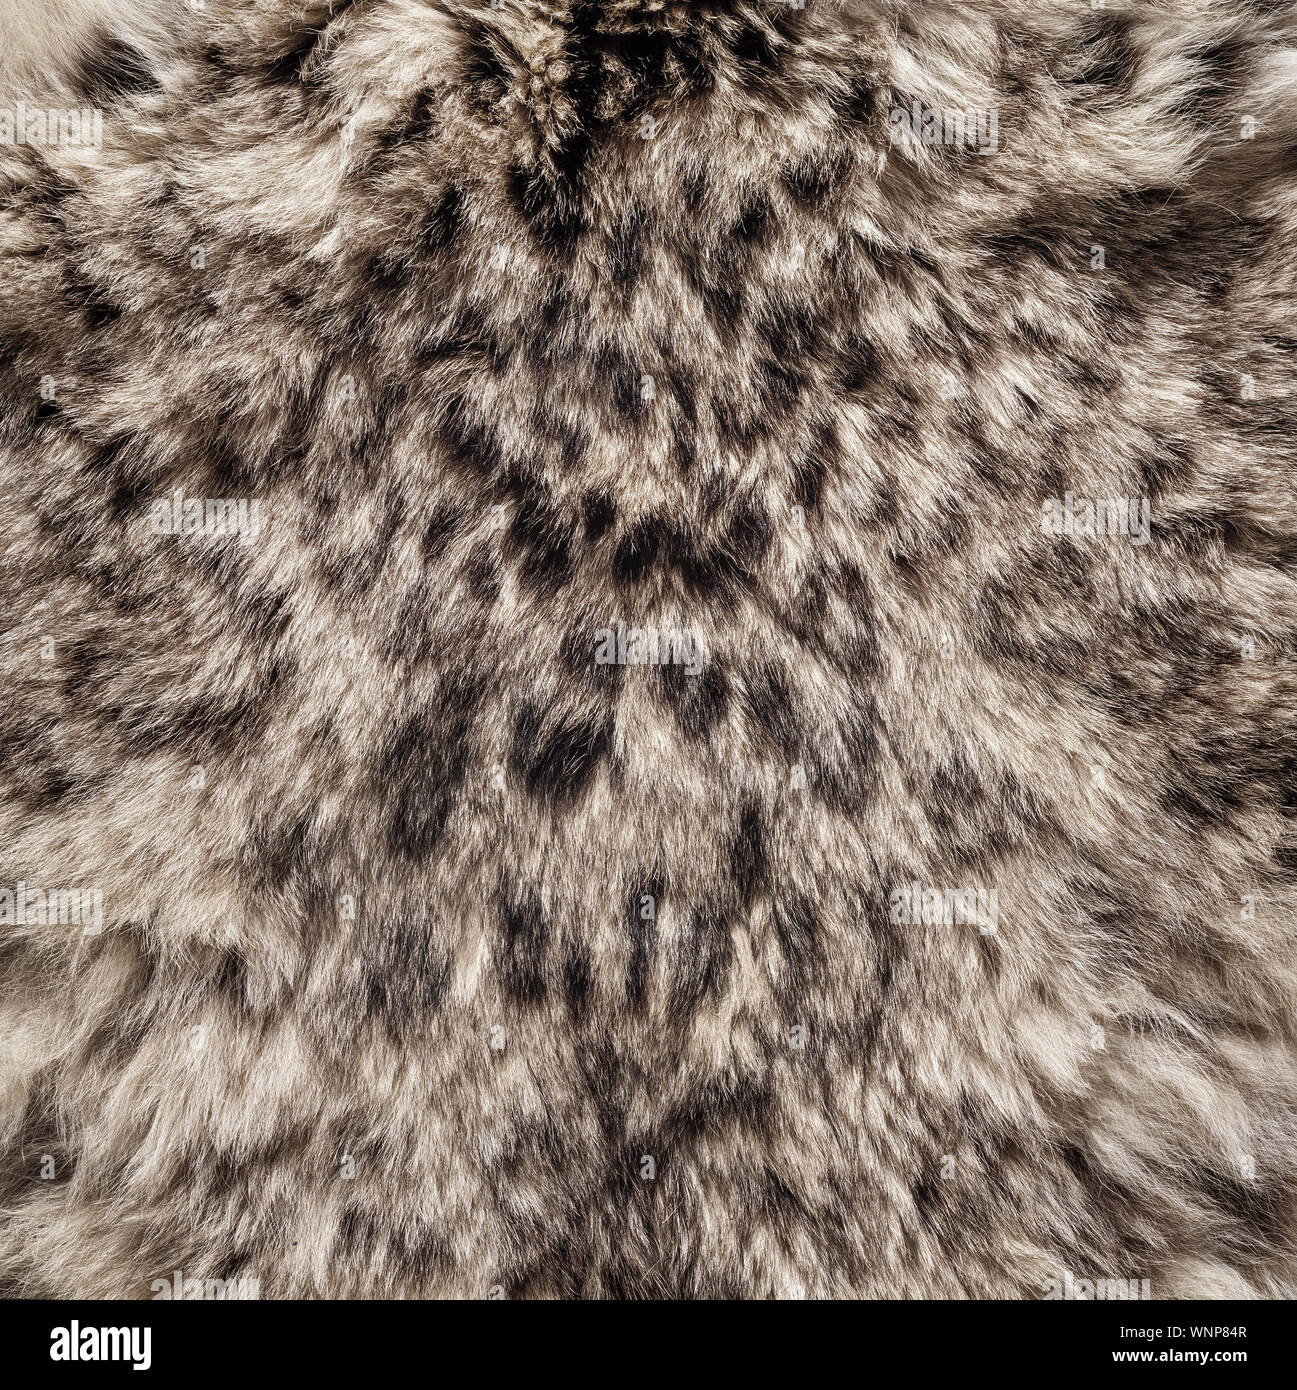 Snow leopard, fur pelt showing characteristic markings, Panthera unica Stock Photo